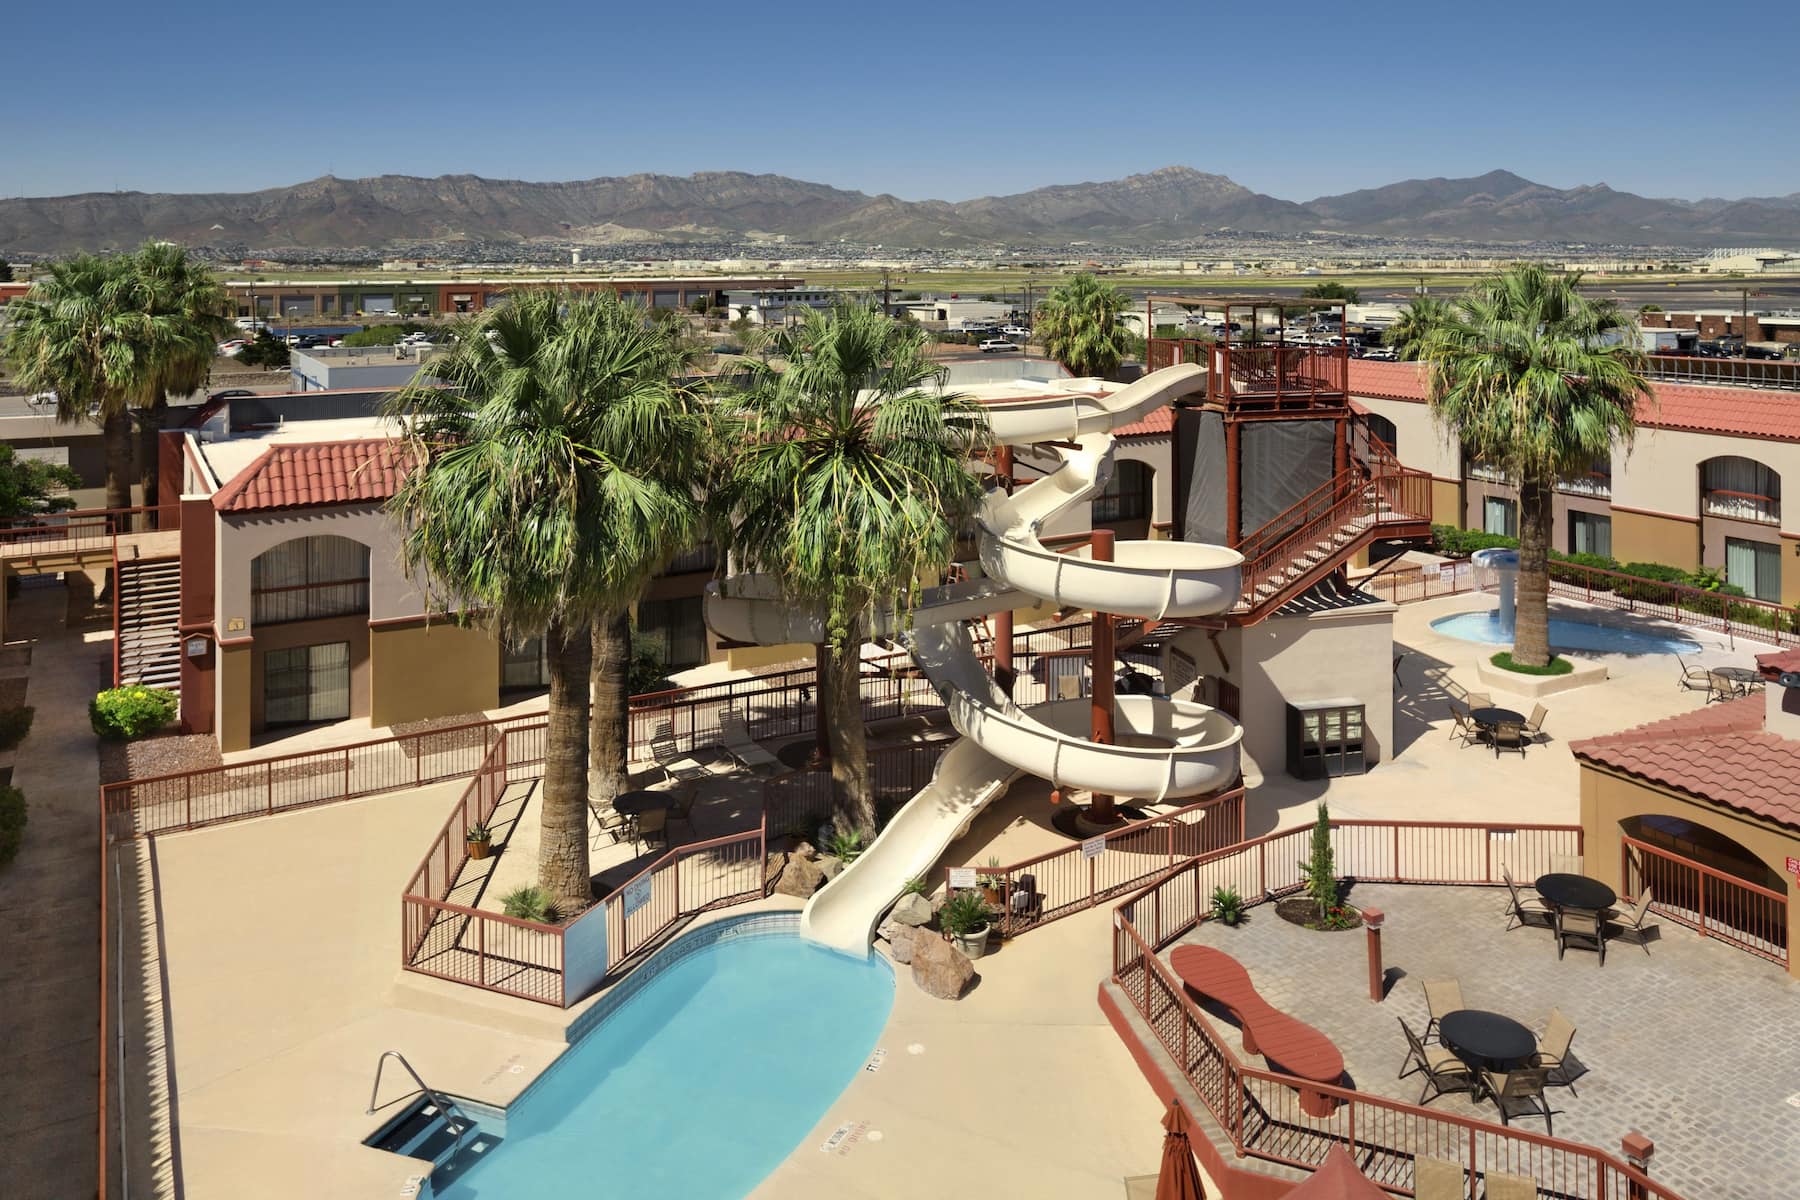 Wyndham El Paso Airport Hotel and Water Park Meetings1800 x 1200